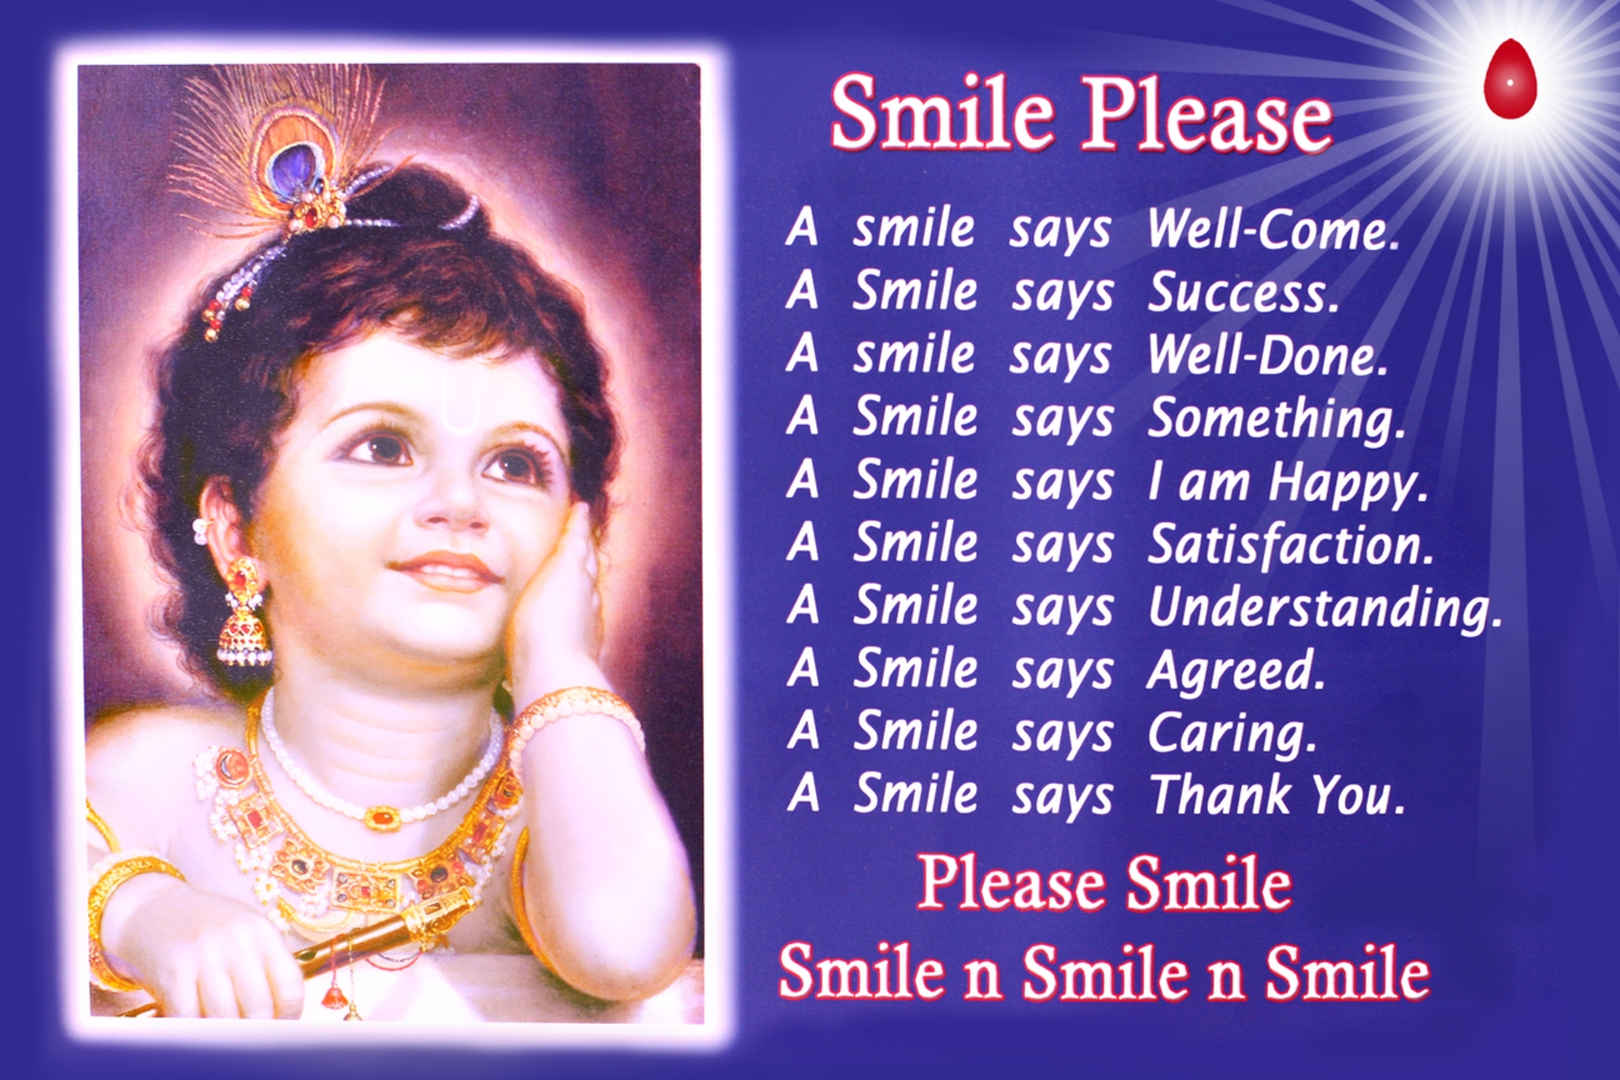 Smile please